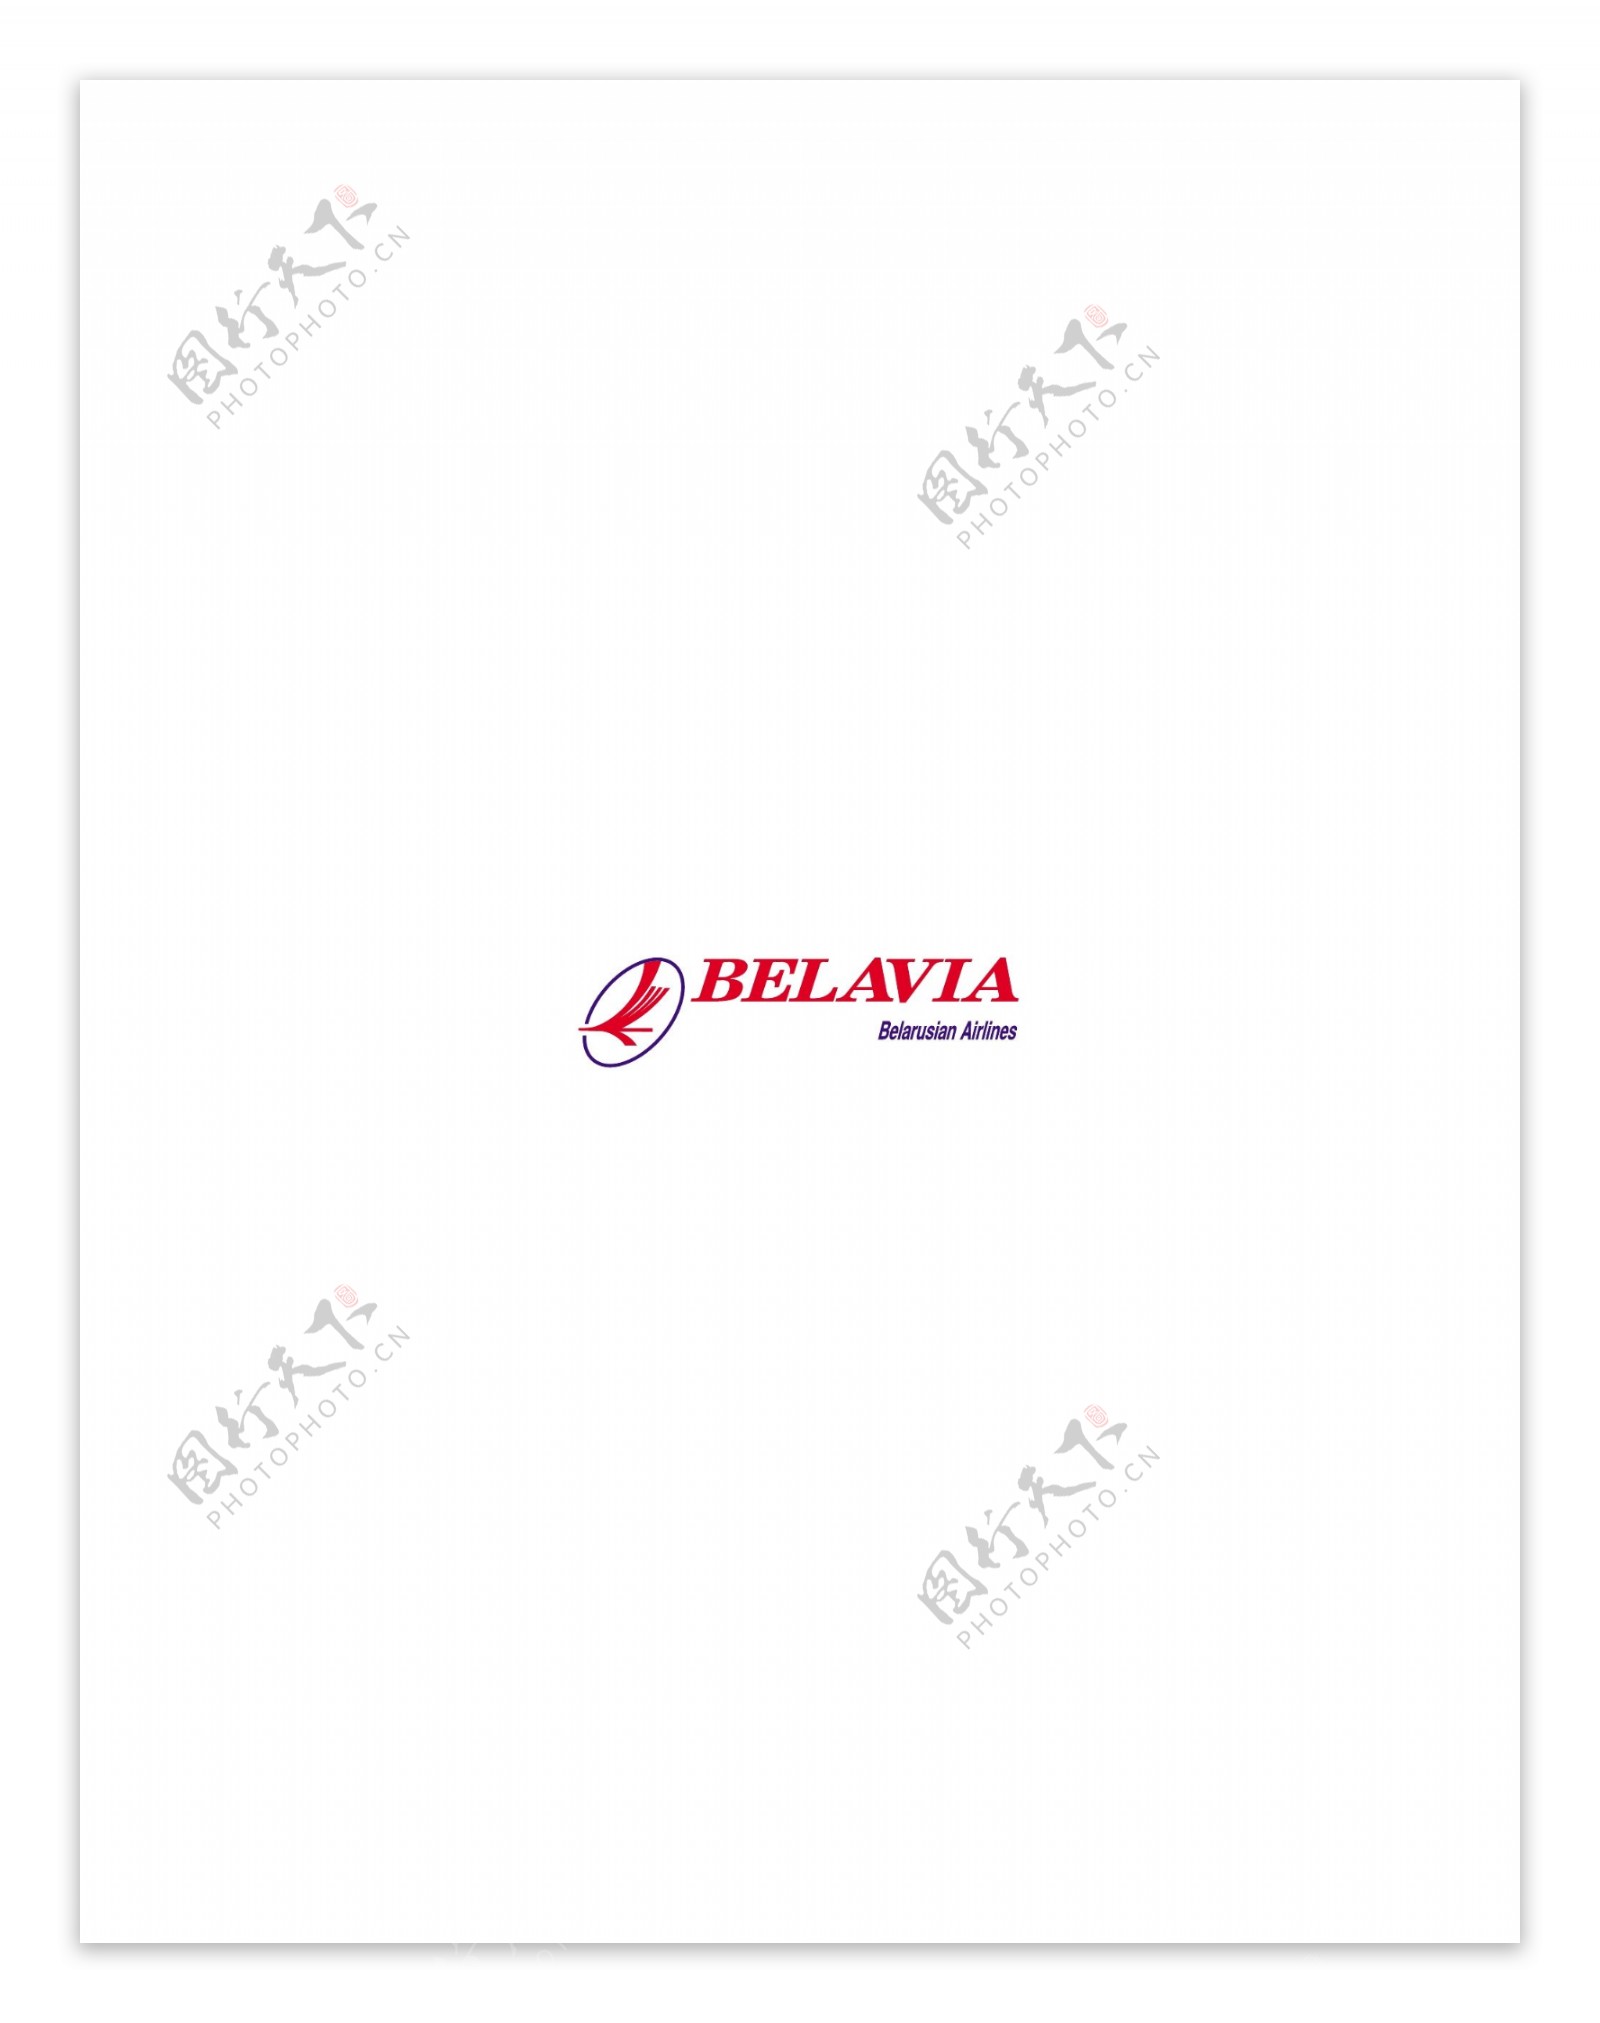 Belavialogo设计欣赏软件和硬件公司标志Belavia下载标志设计欣赏